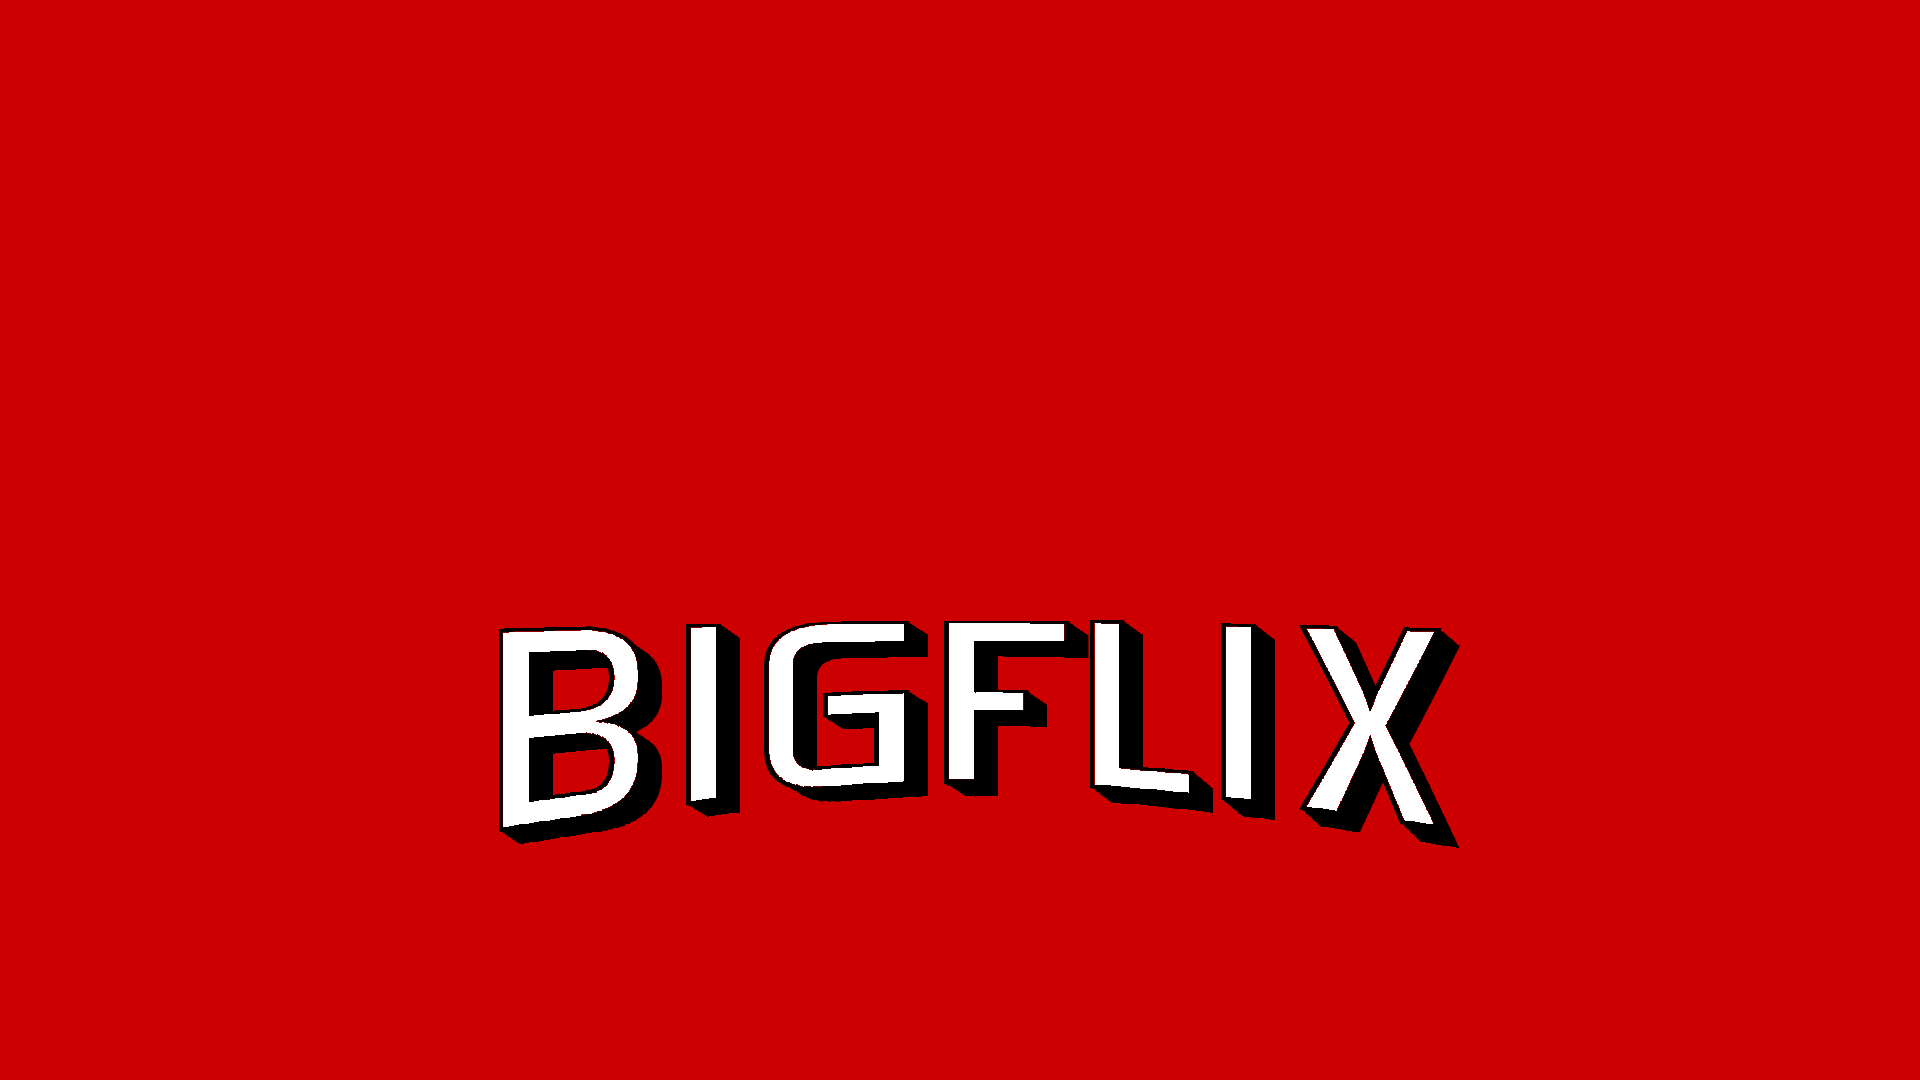 BIGFlix Logo - BIGFLIX - Big Box Custom Themes - LaunchBox Community Forums